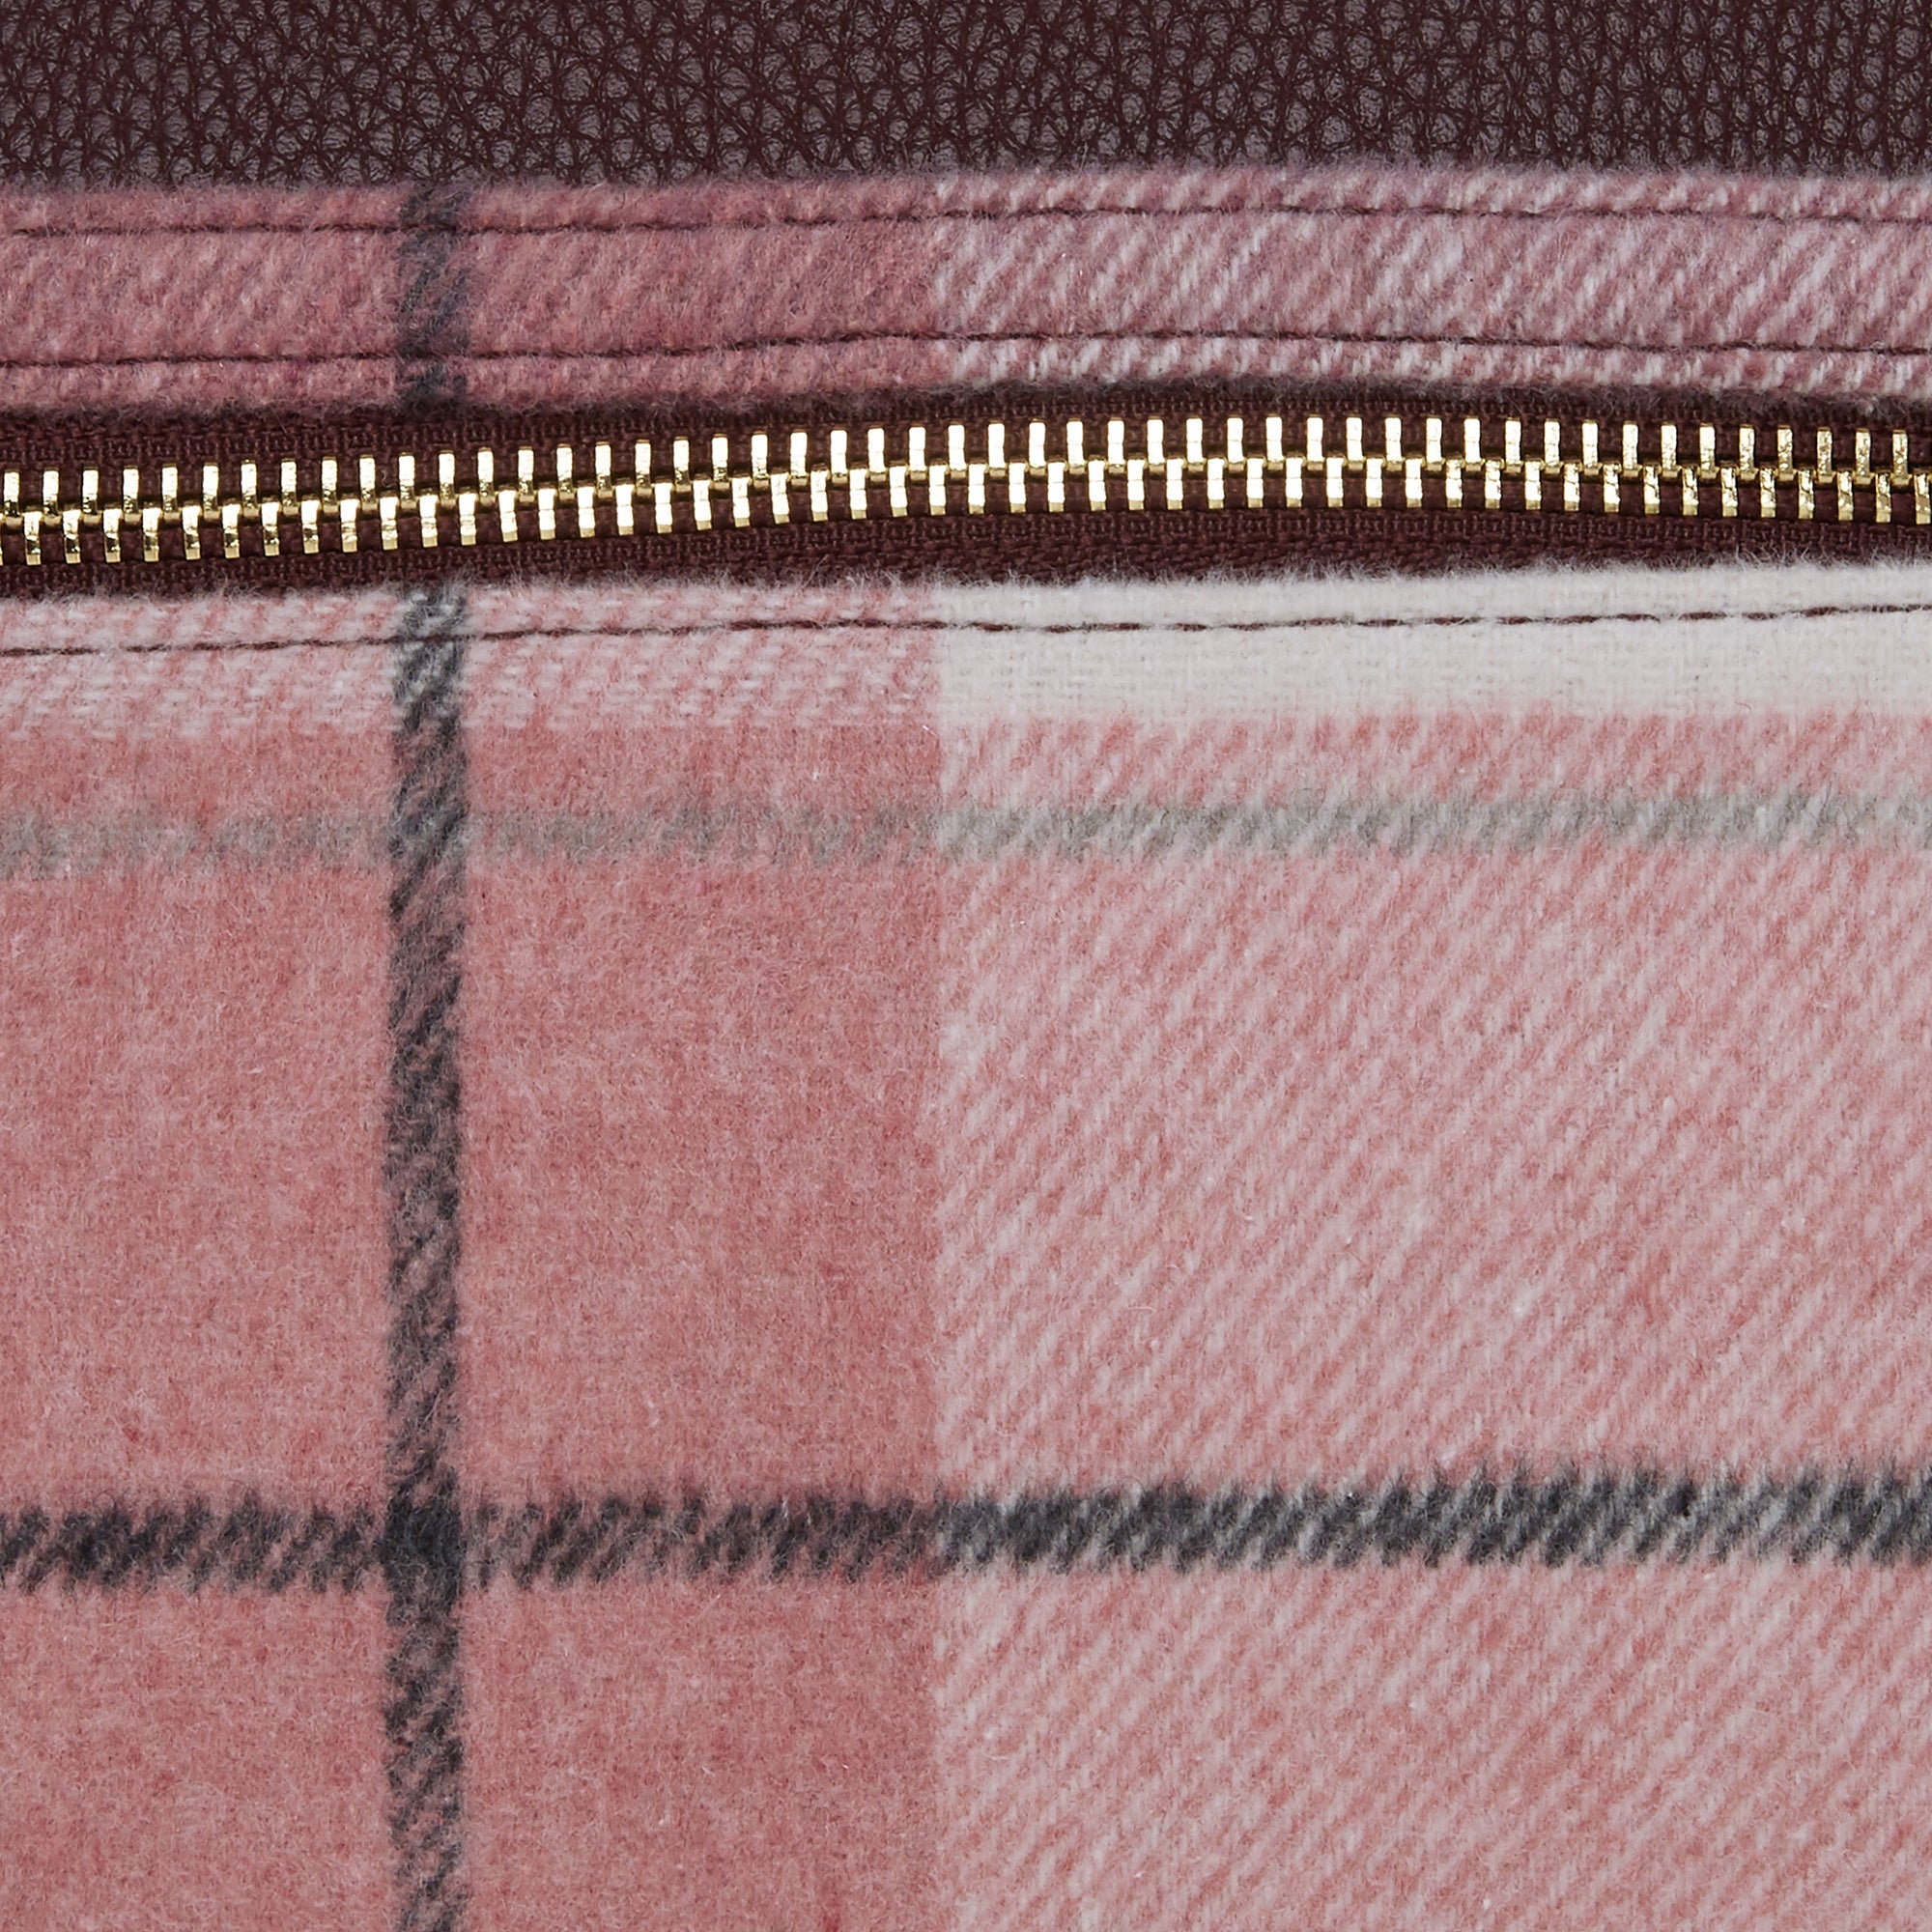 Accessorize London Women's Fabric Pink Kensington Check Sling Bag